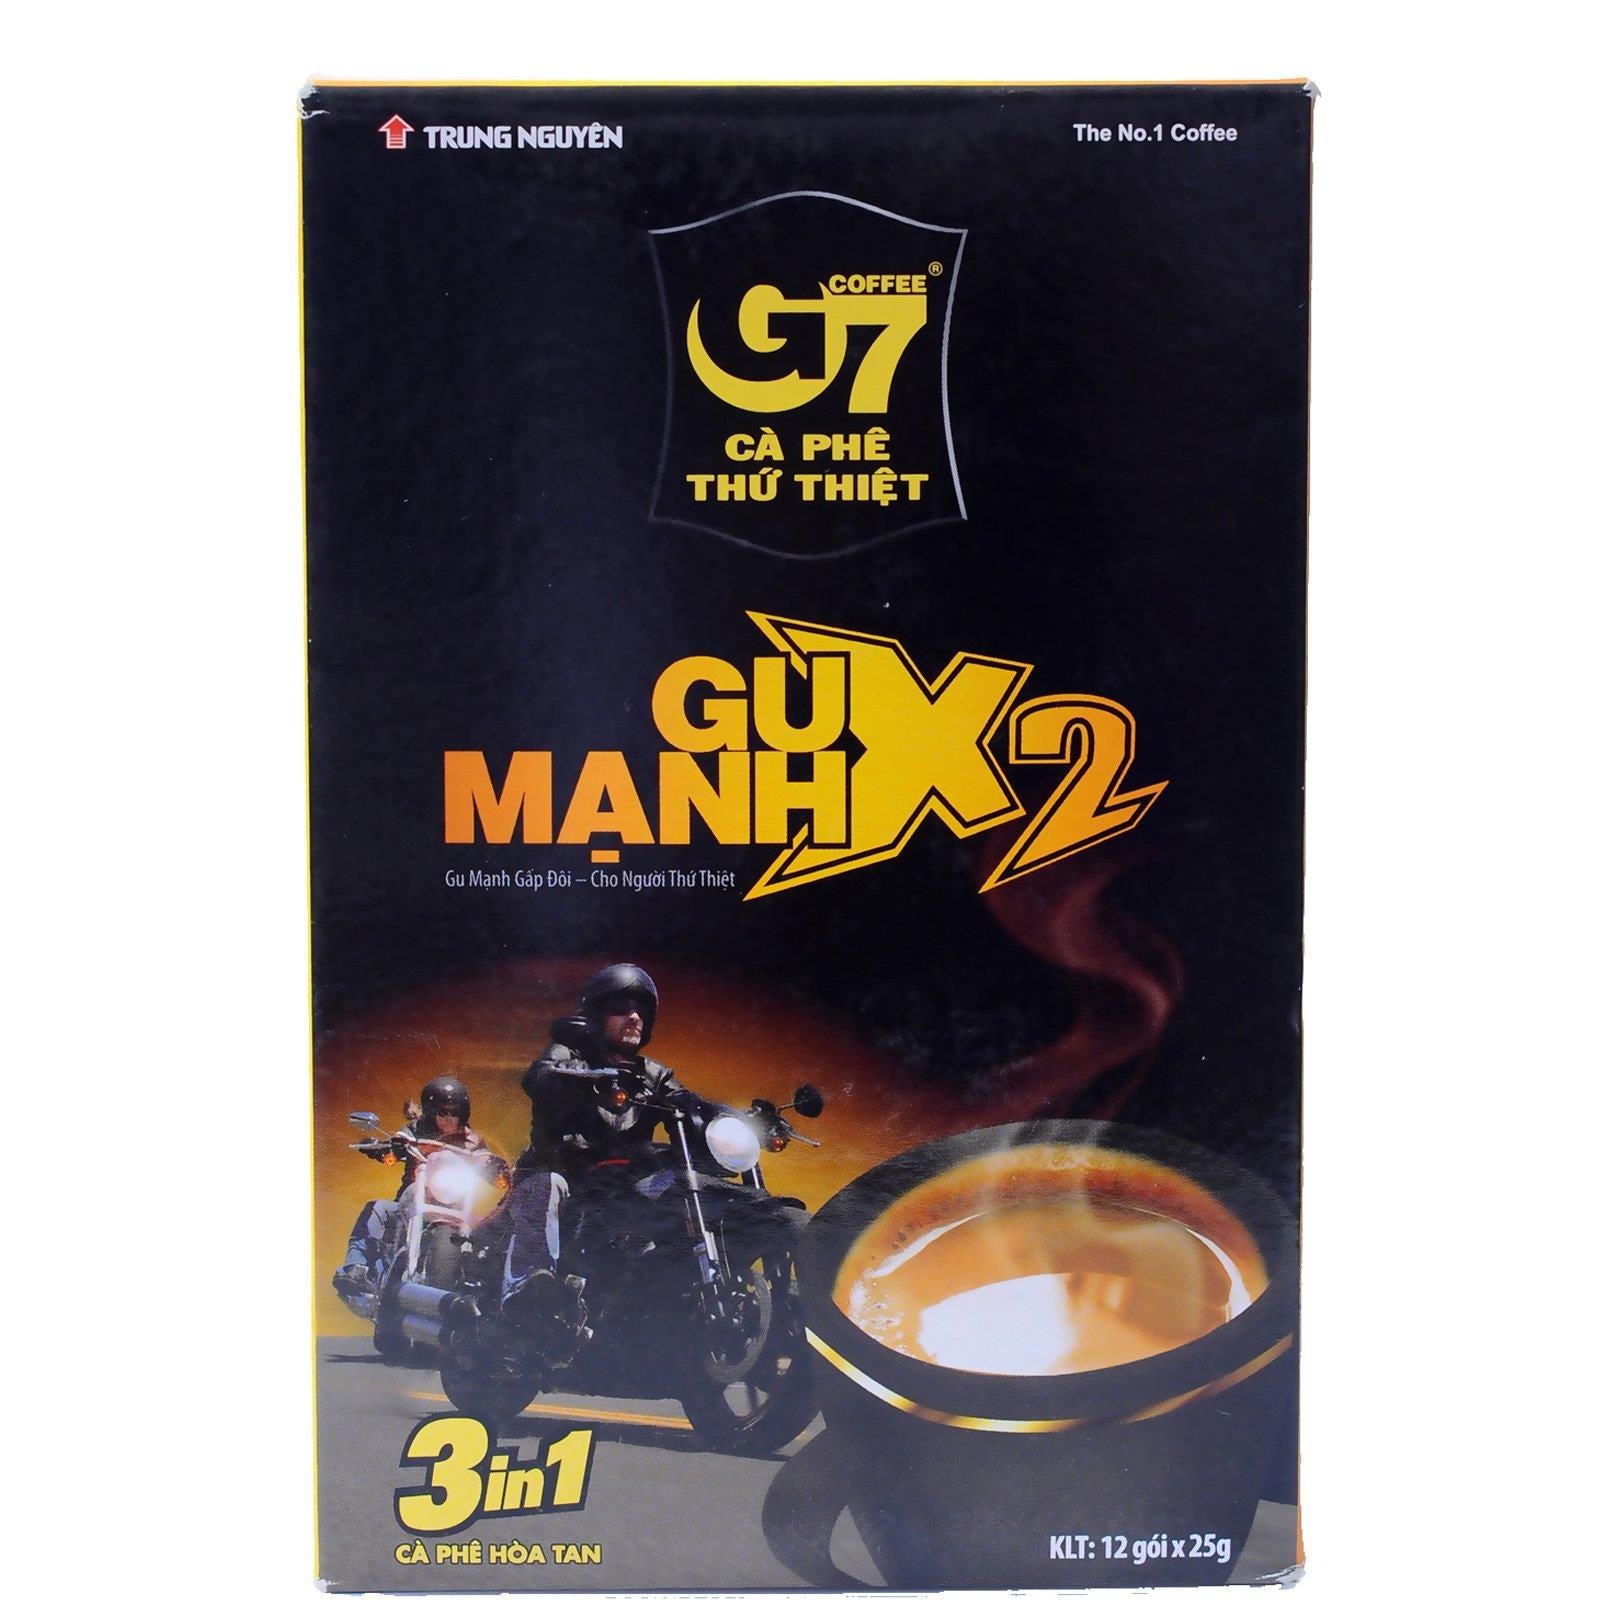 Trung Nguyen G7 Coffee Gu Manh X2, 3 in 1 Coffee, 12 Sachet 25g